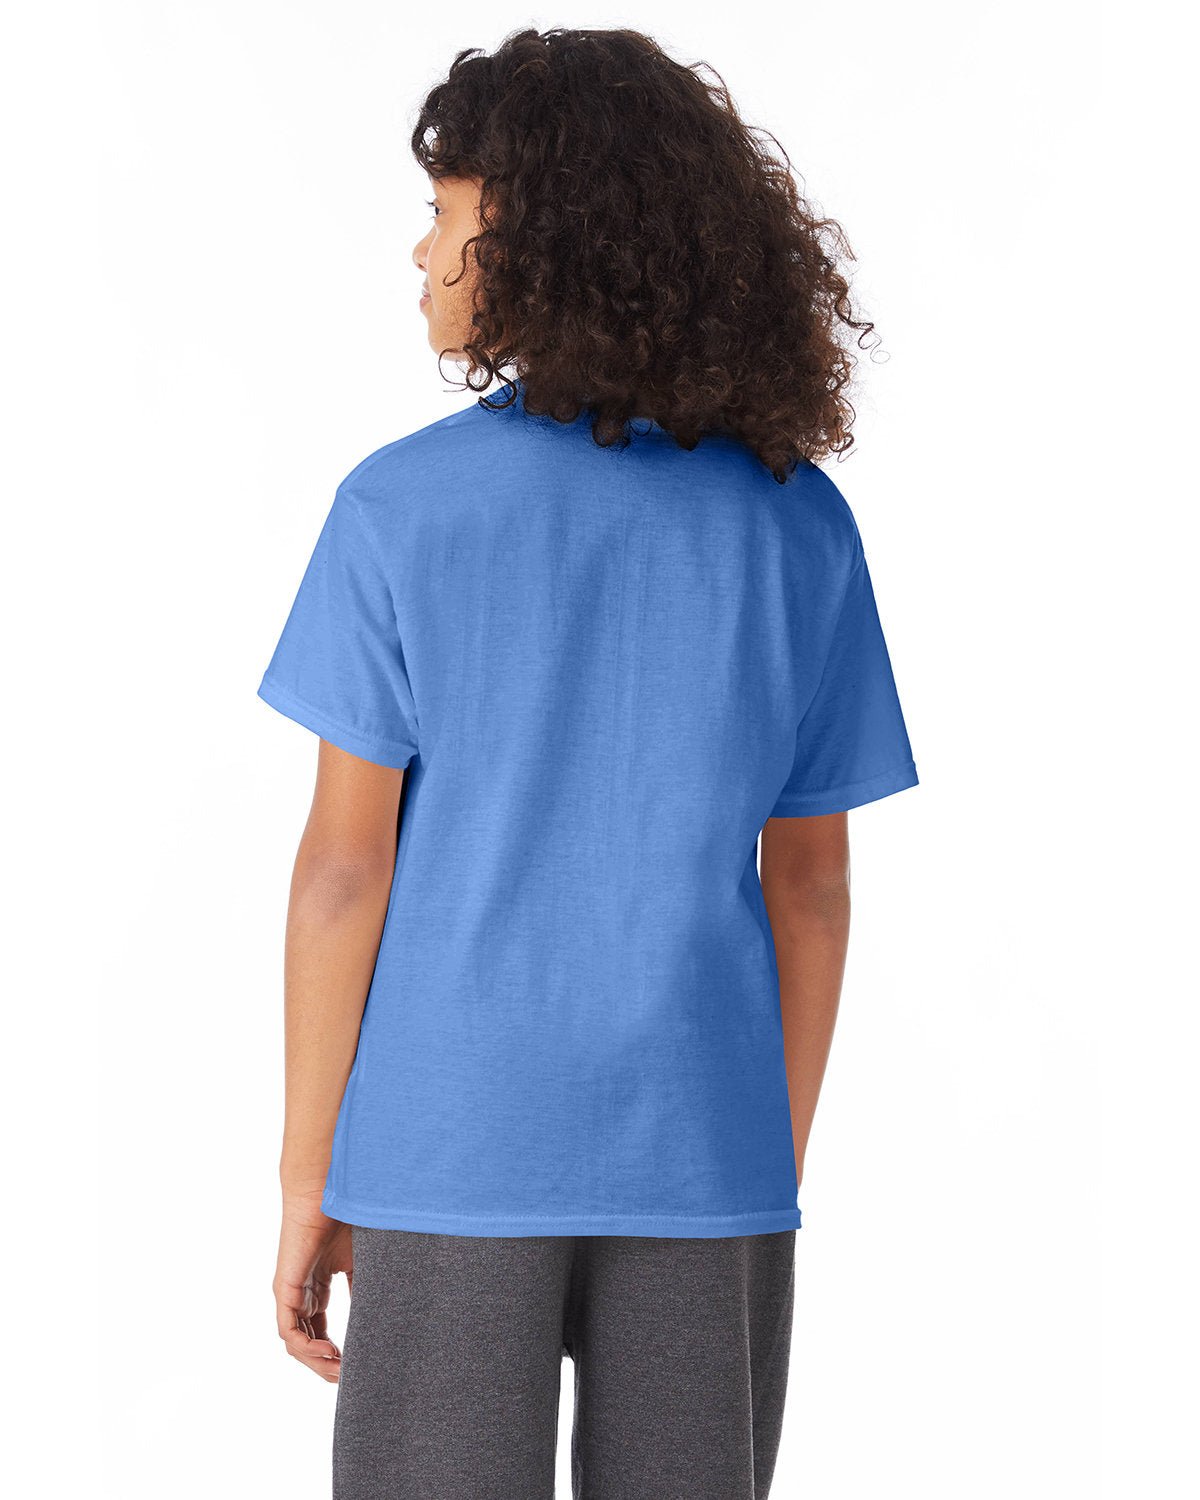 5370-Hanes-CAROLINA BLUE-Hanes-T-Shirts-2